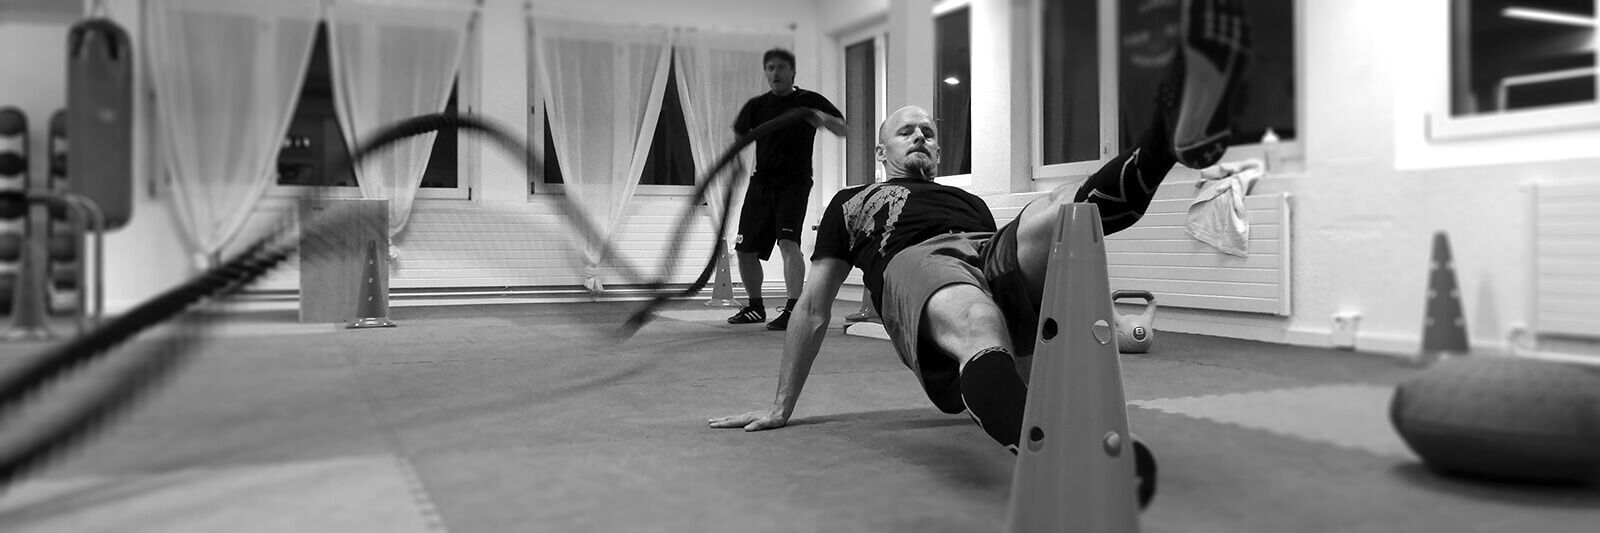 Body Workout | Krav Maga in Oberwil-Lieli